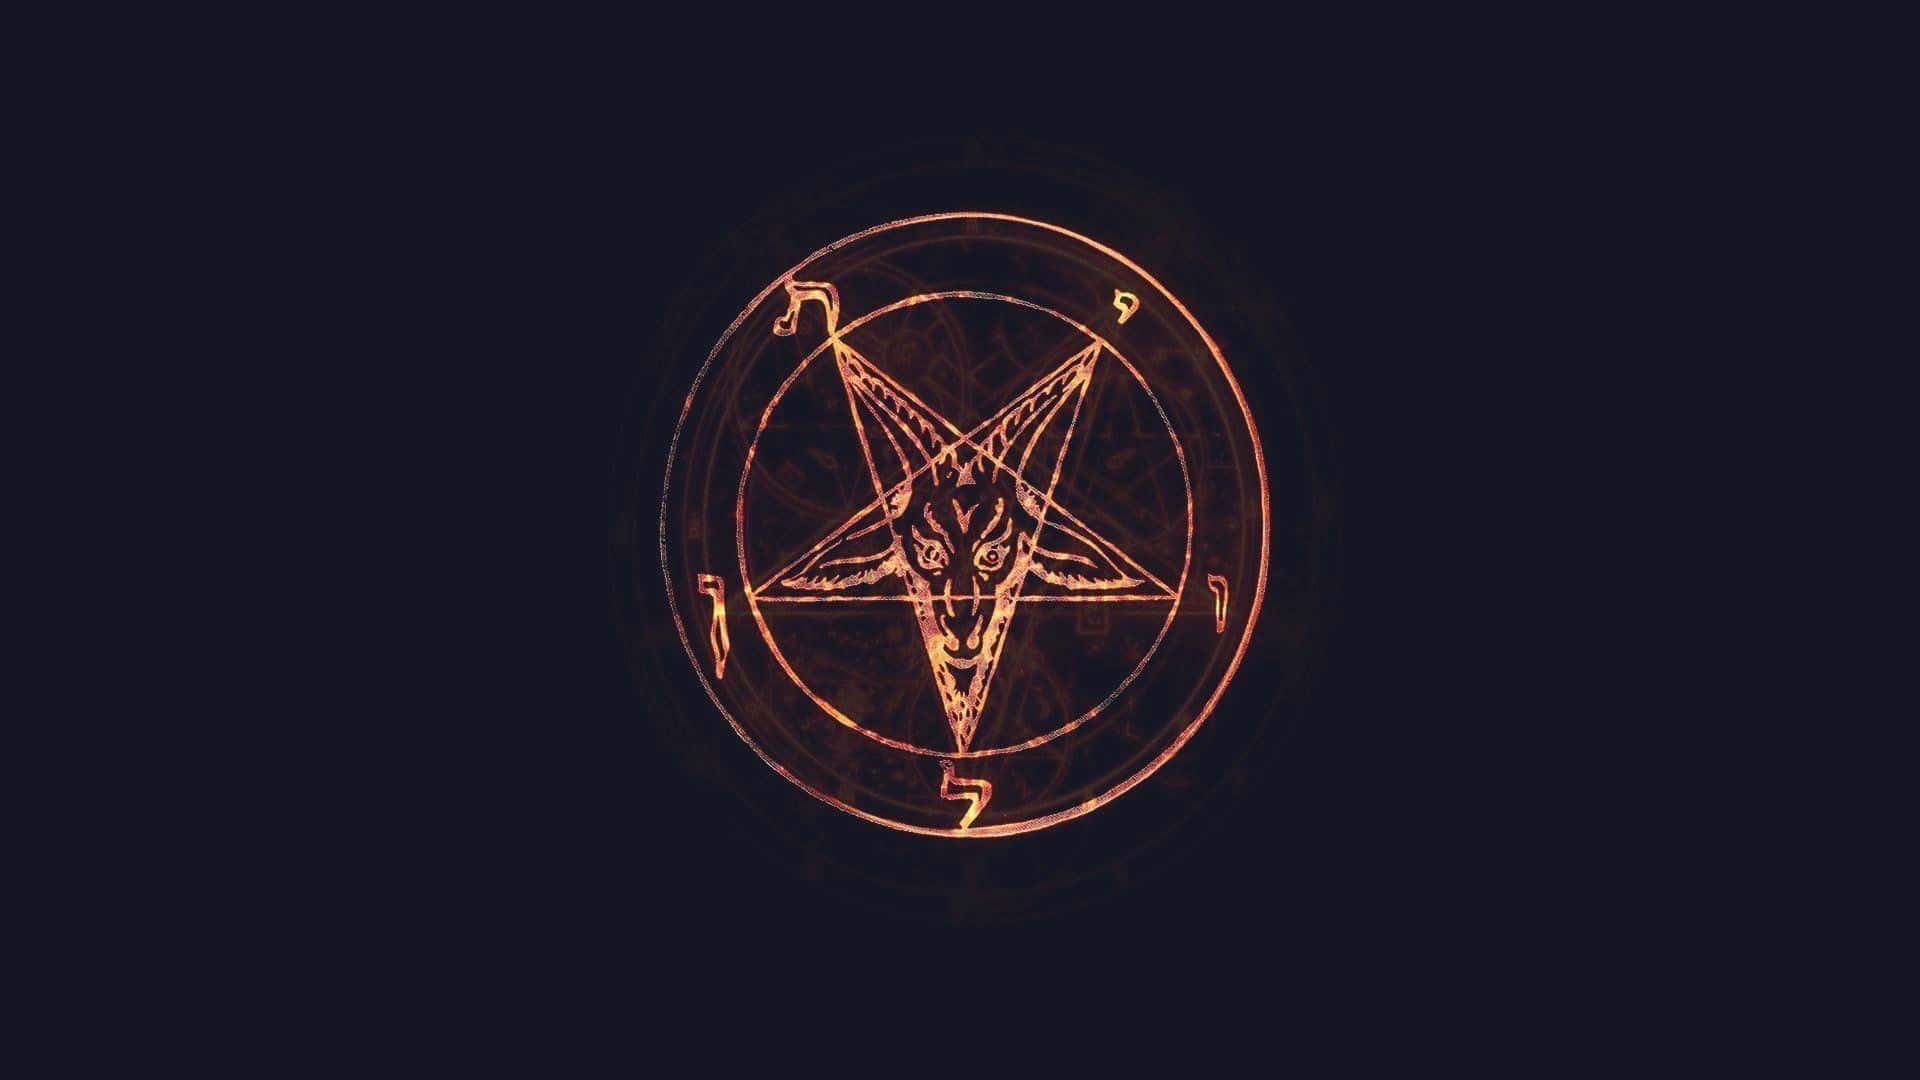 Satanic Pentagramon Black Background Wallpaper